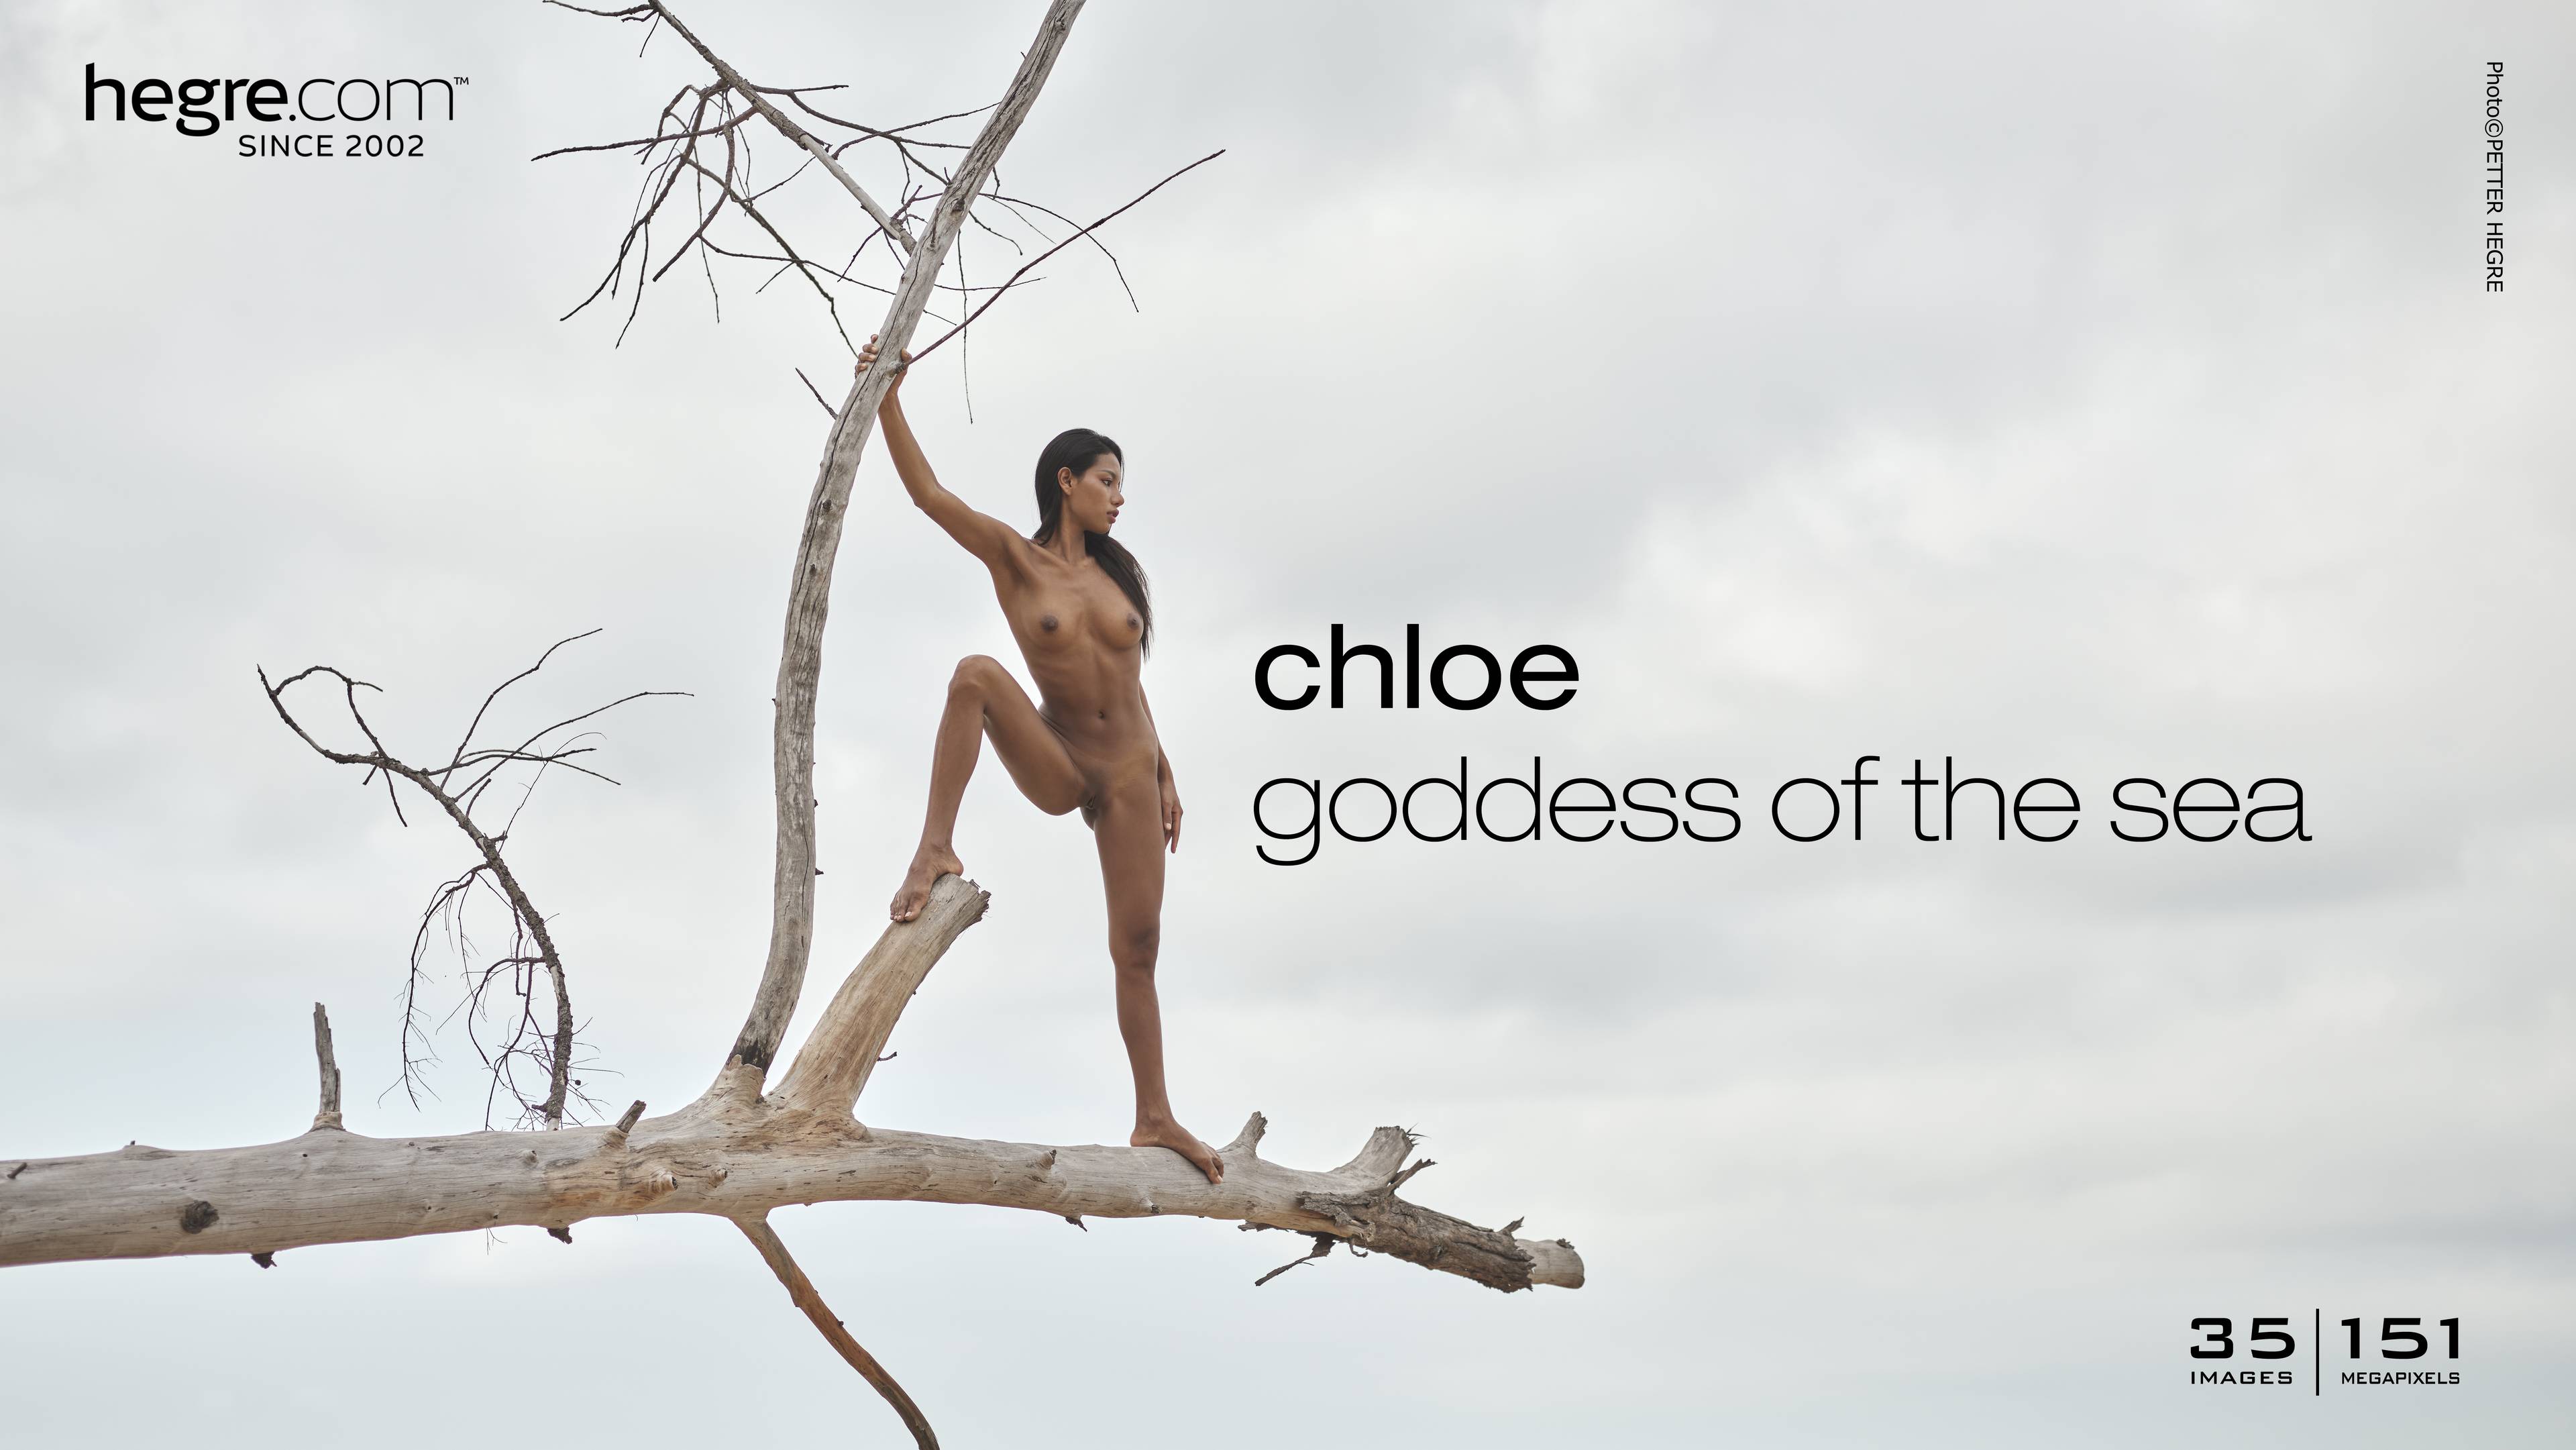 chloe-goddess-of-the-sea-board.jpg